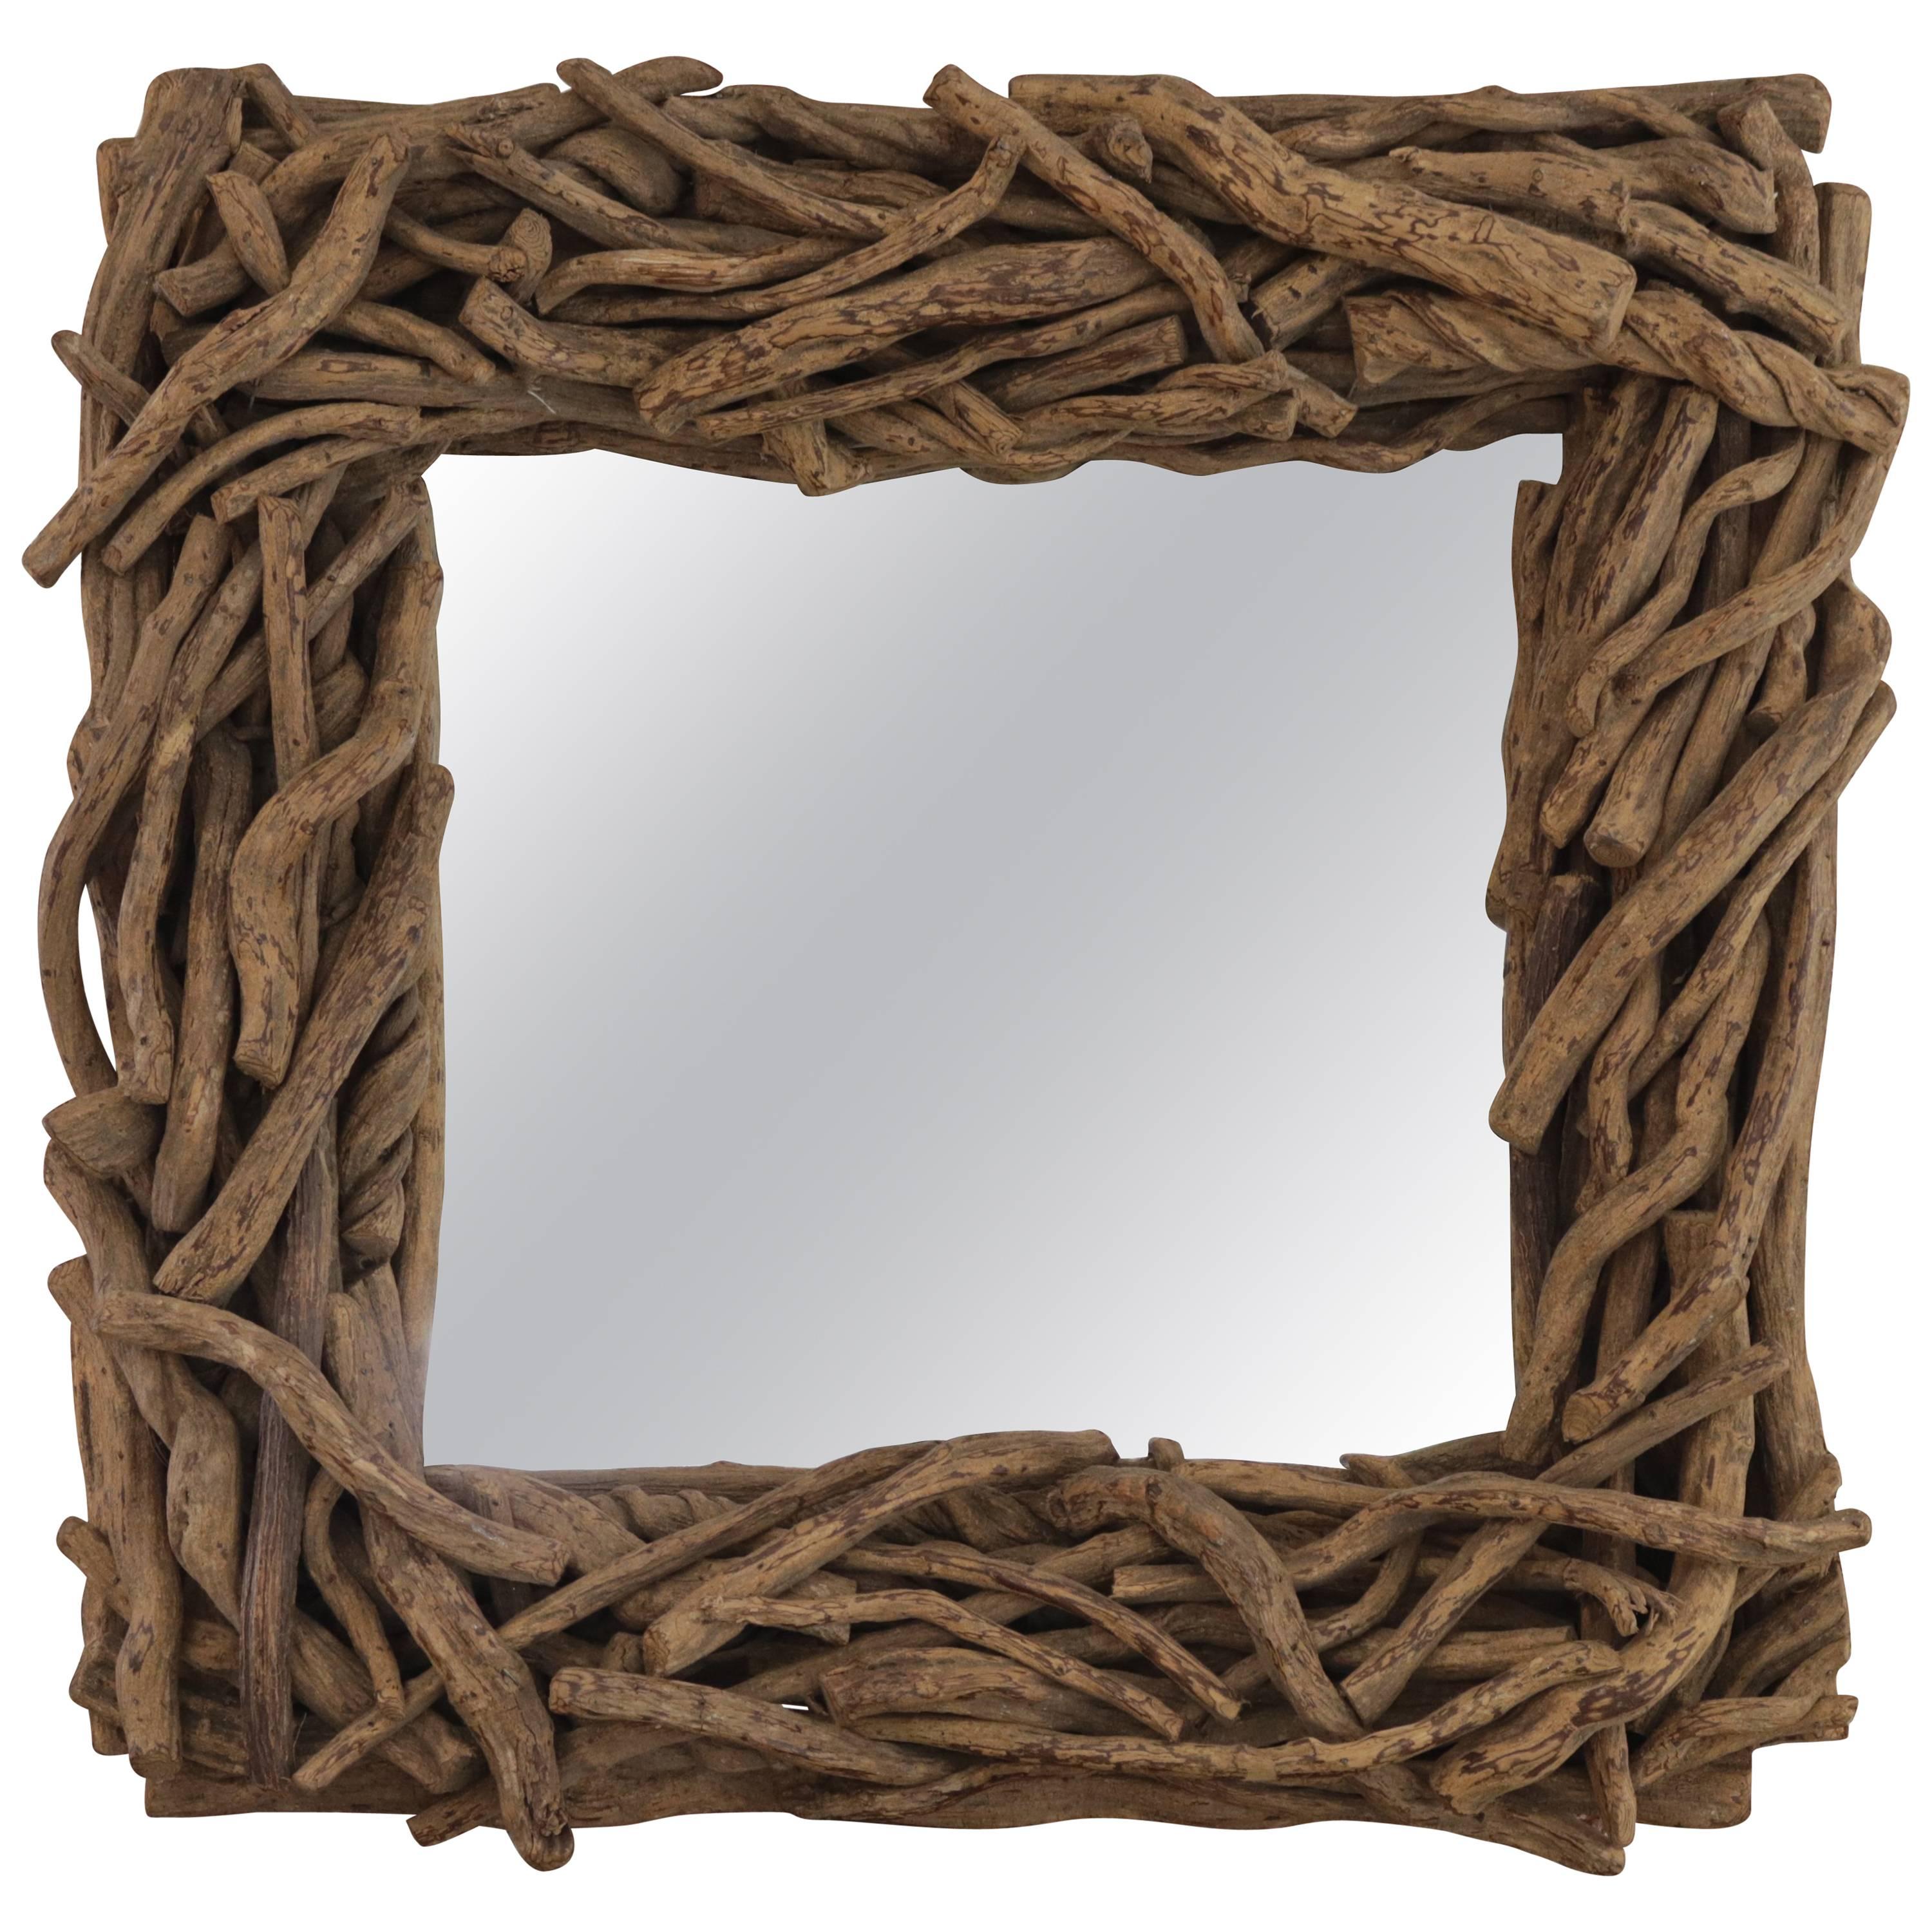 Sculptural Organic Square Bundled Driftwood Mirror